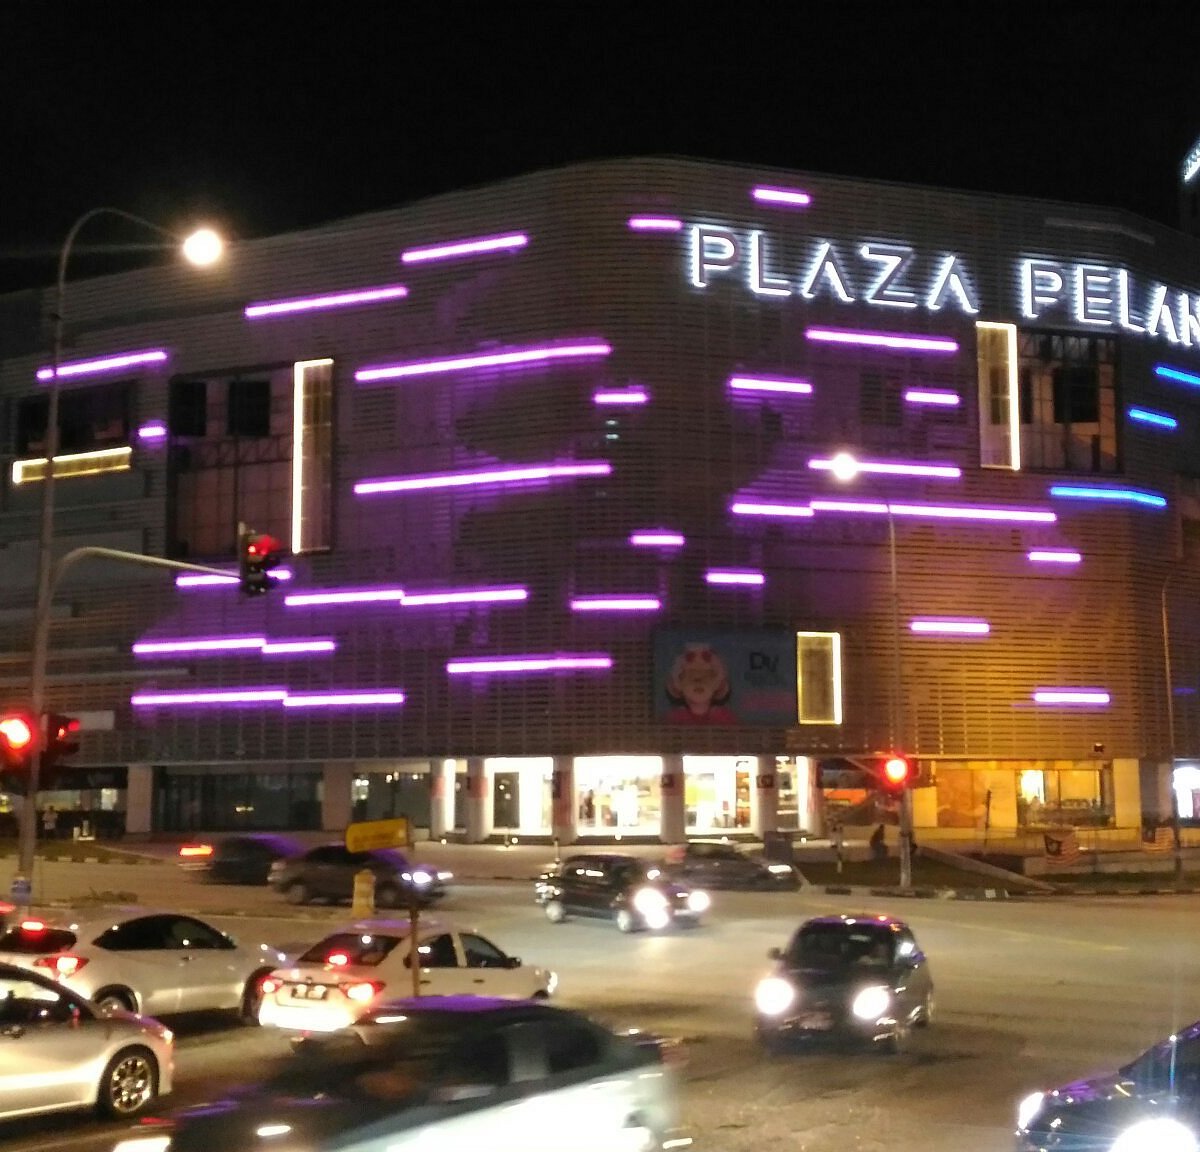 City plaza jb